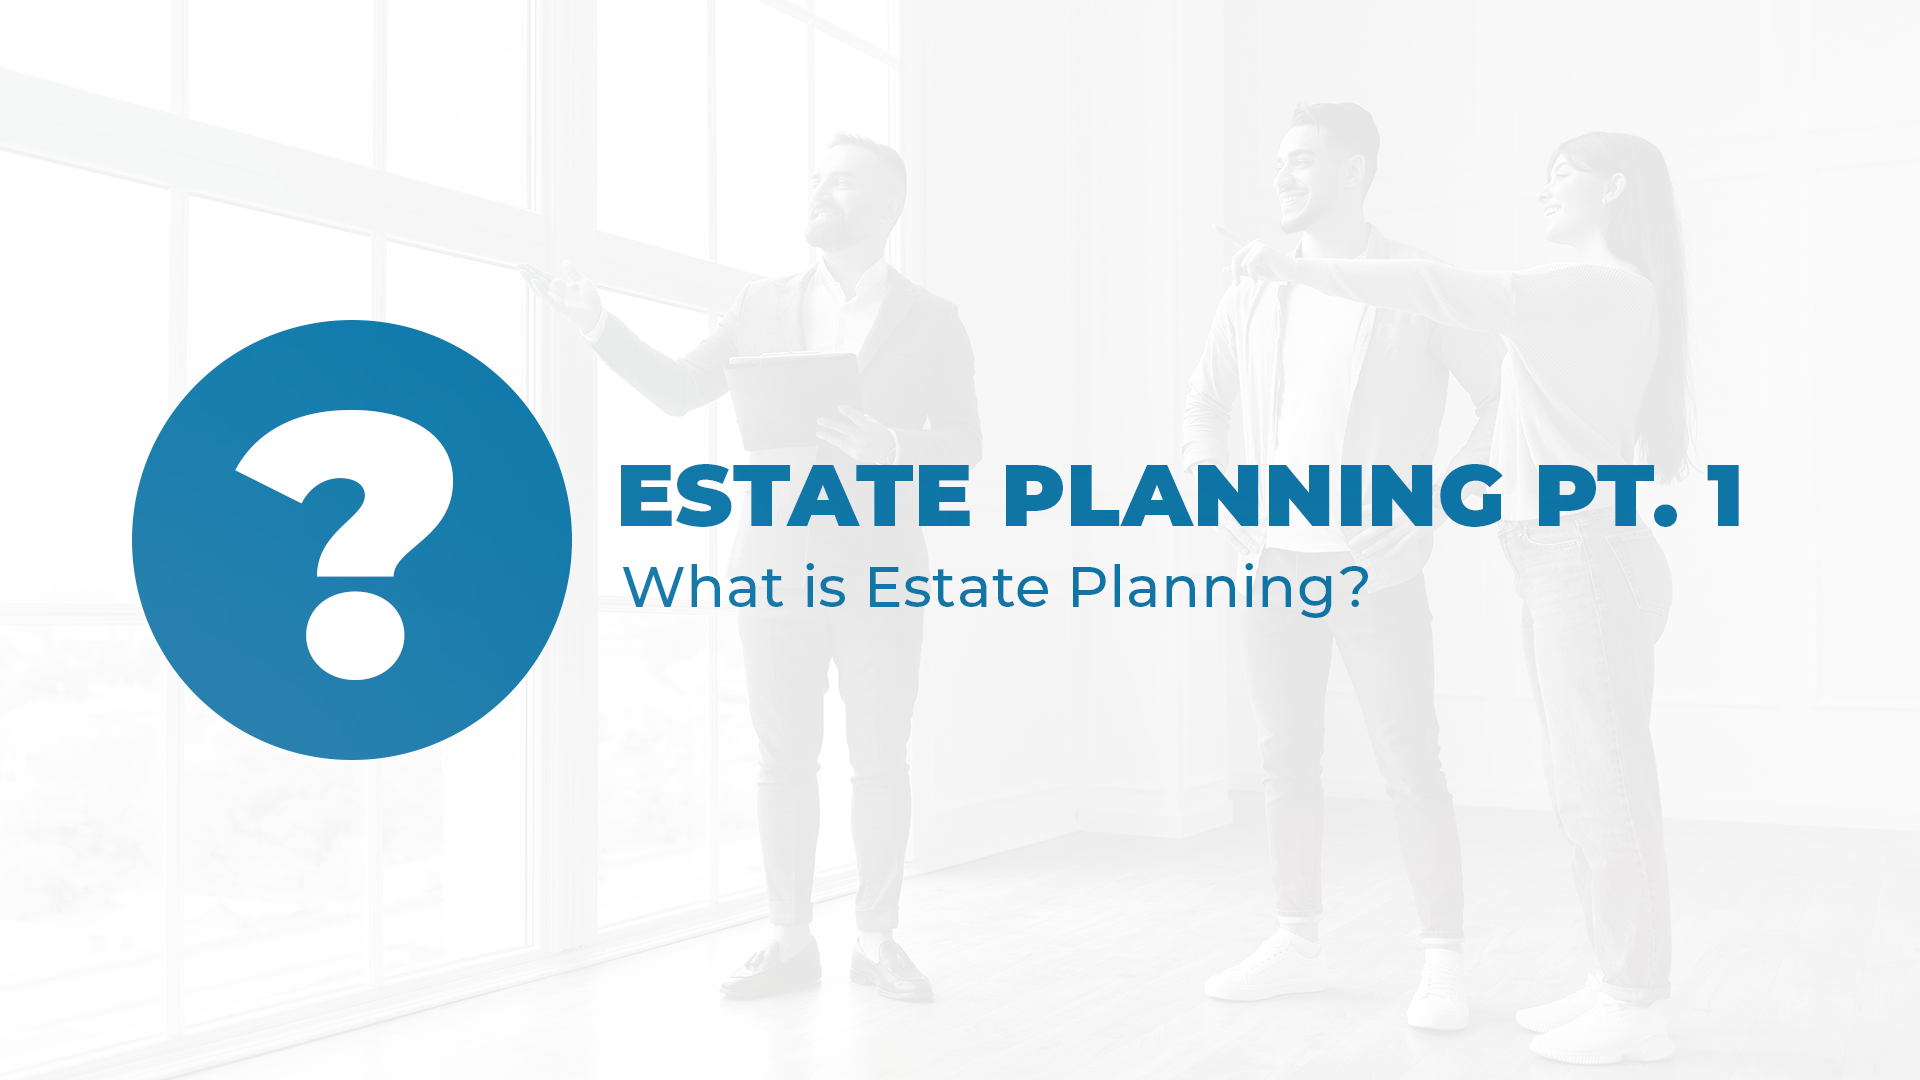 Estate Planning Part 1 - What is Estate Planning